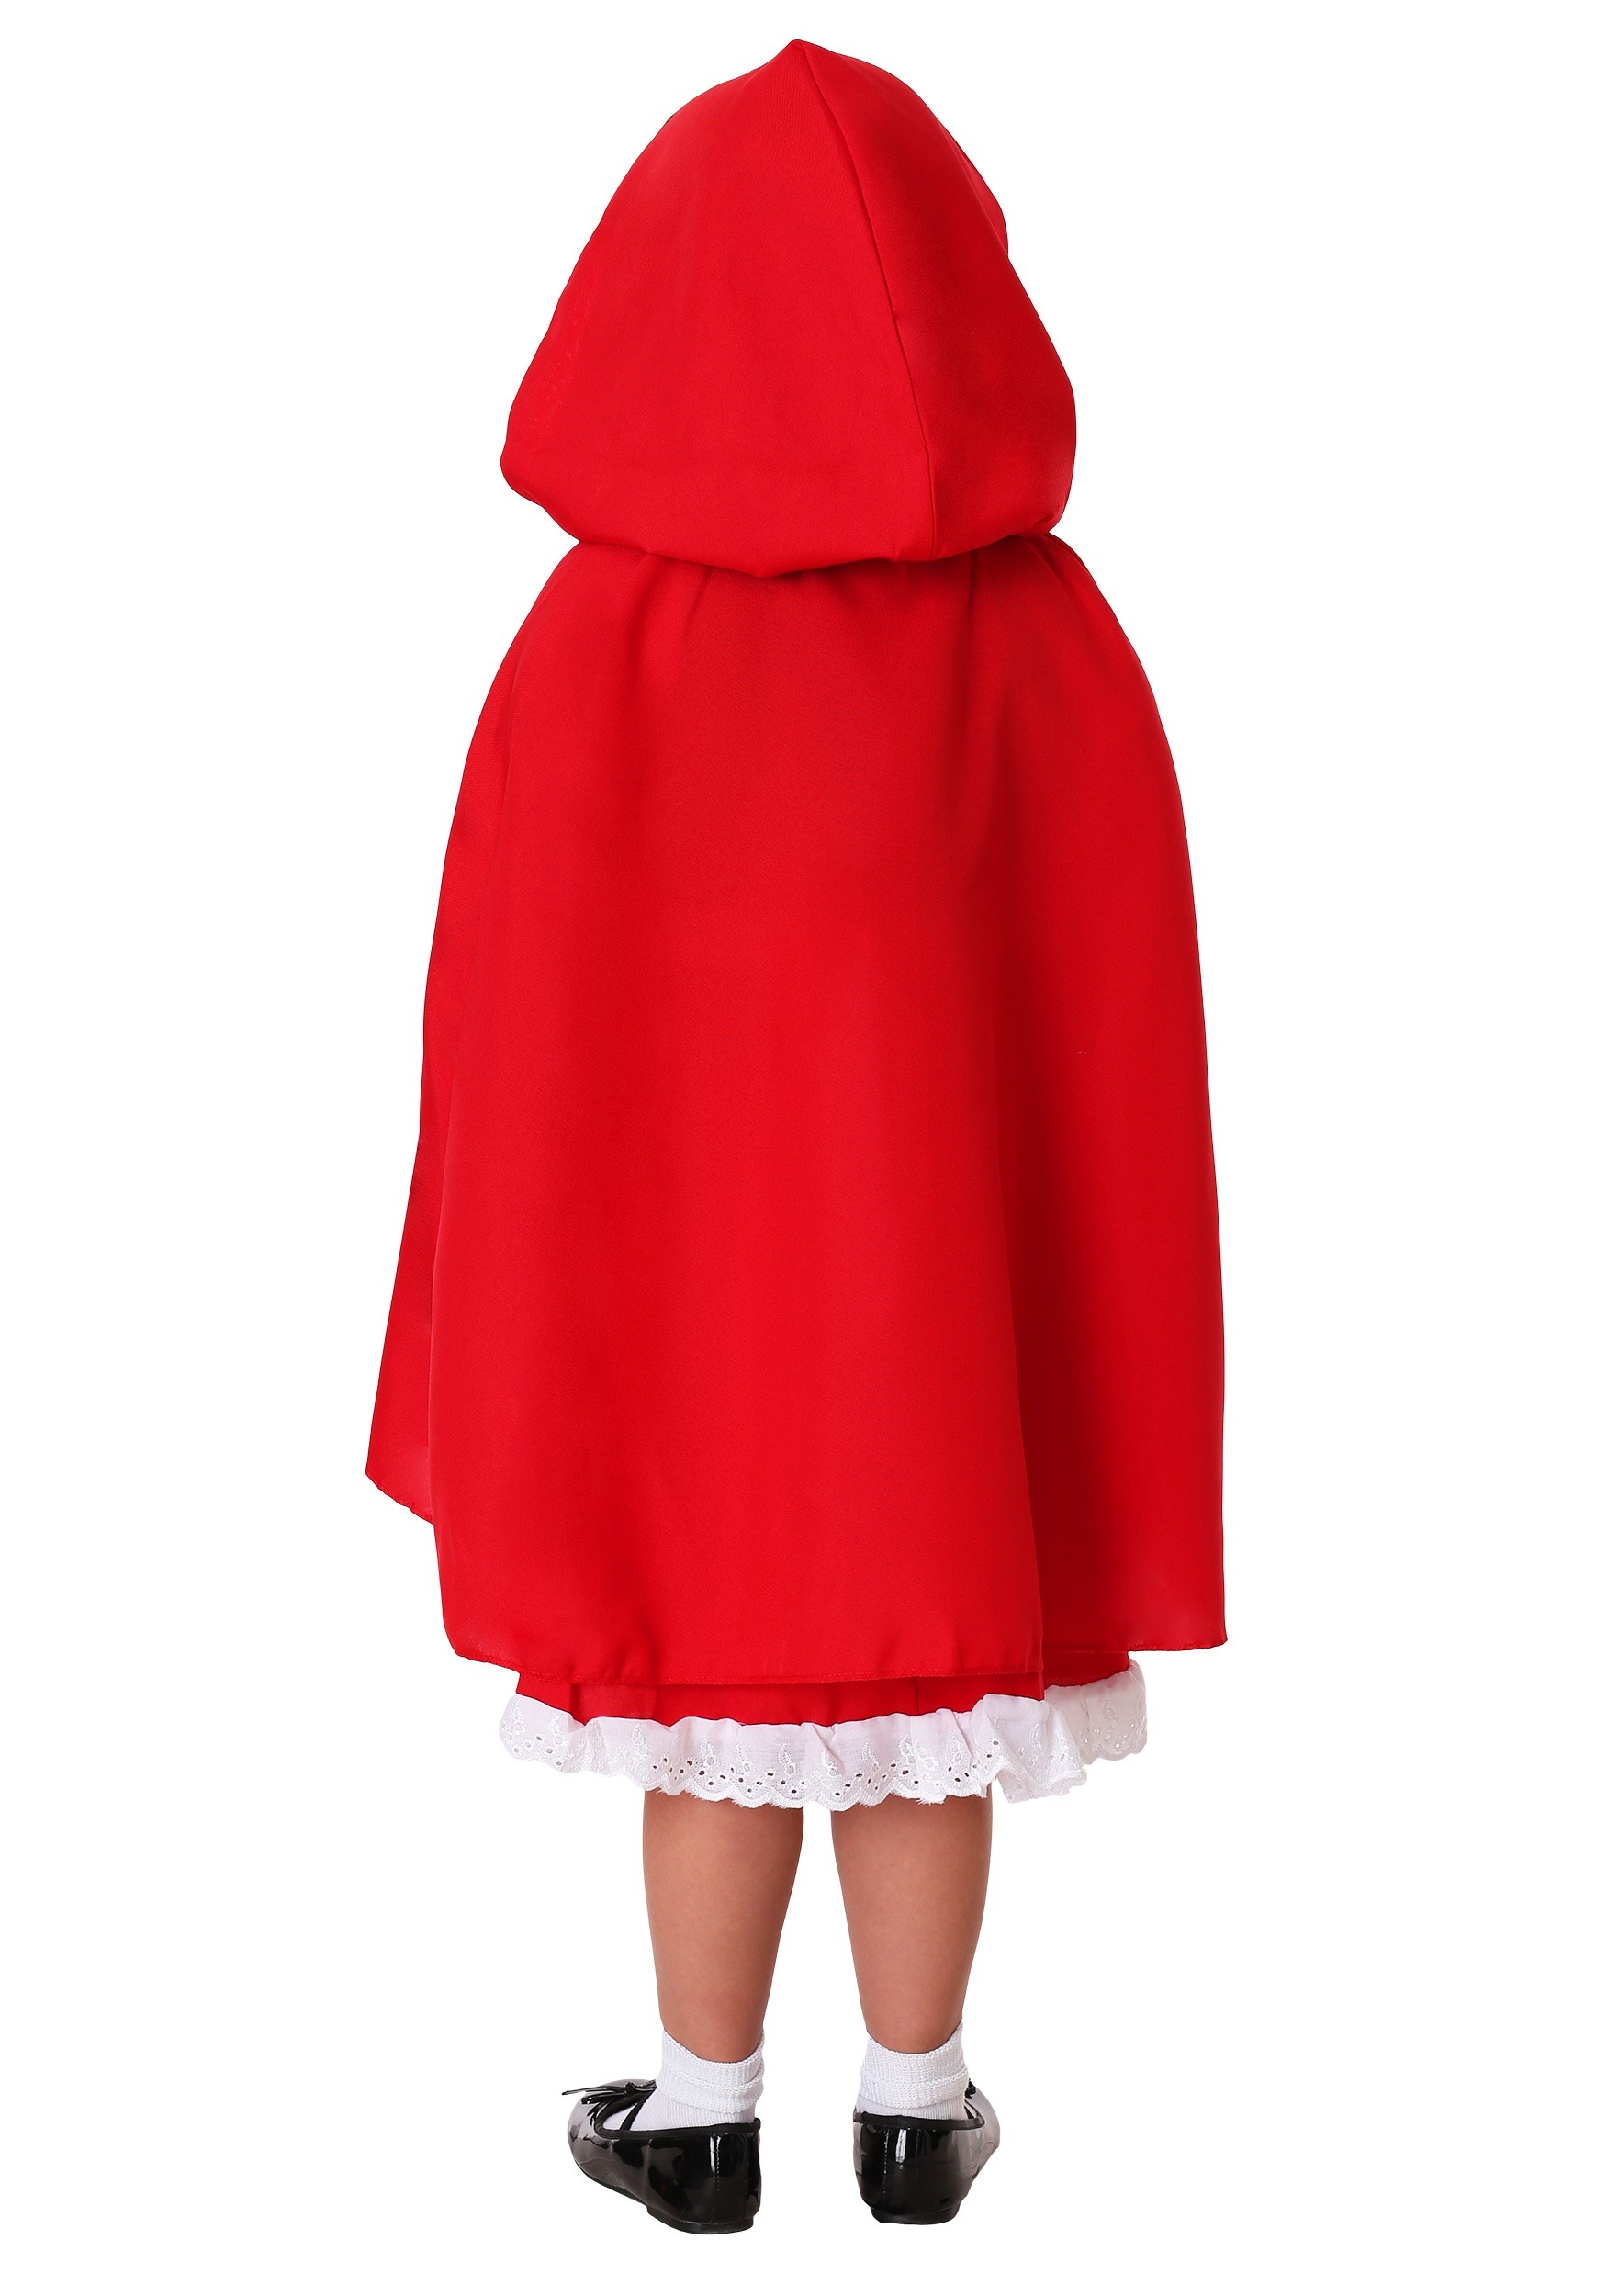 Kids Red Riding Hood Costume